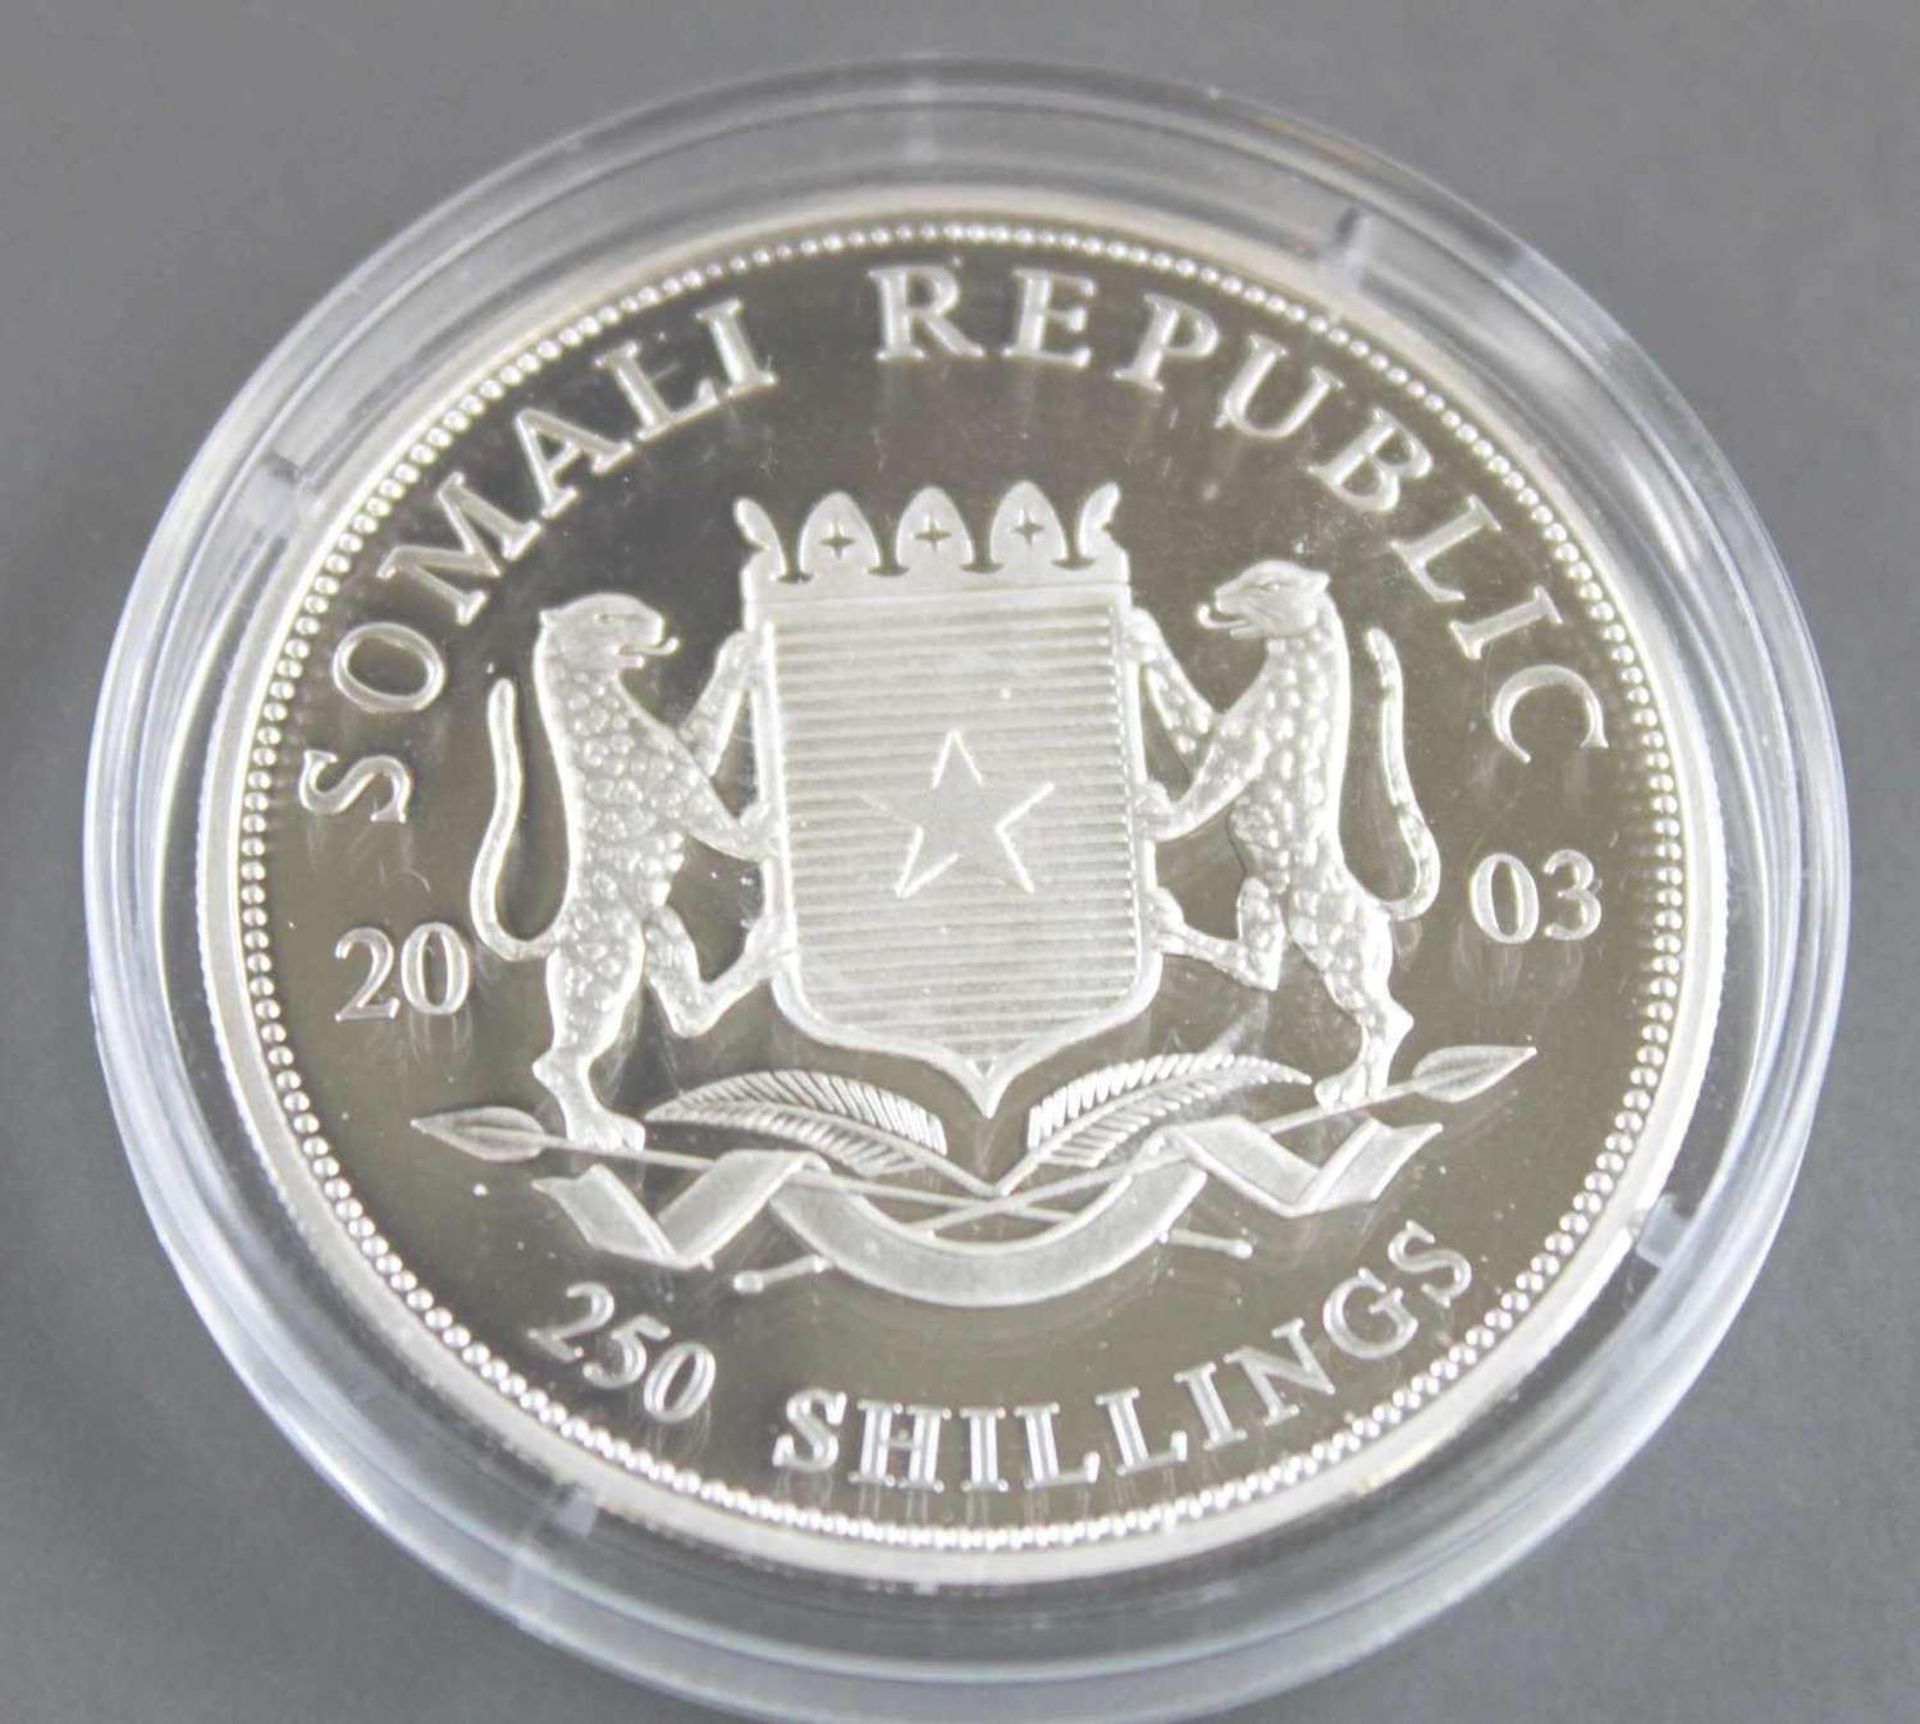 Somali Republic 2003, 250 Shillings - Silbermünze "Otto Hahn - das erste nuklear getriebene - Image 2 of 2